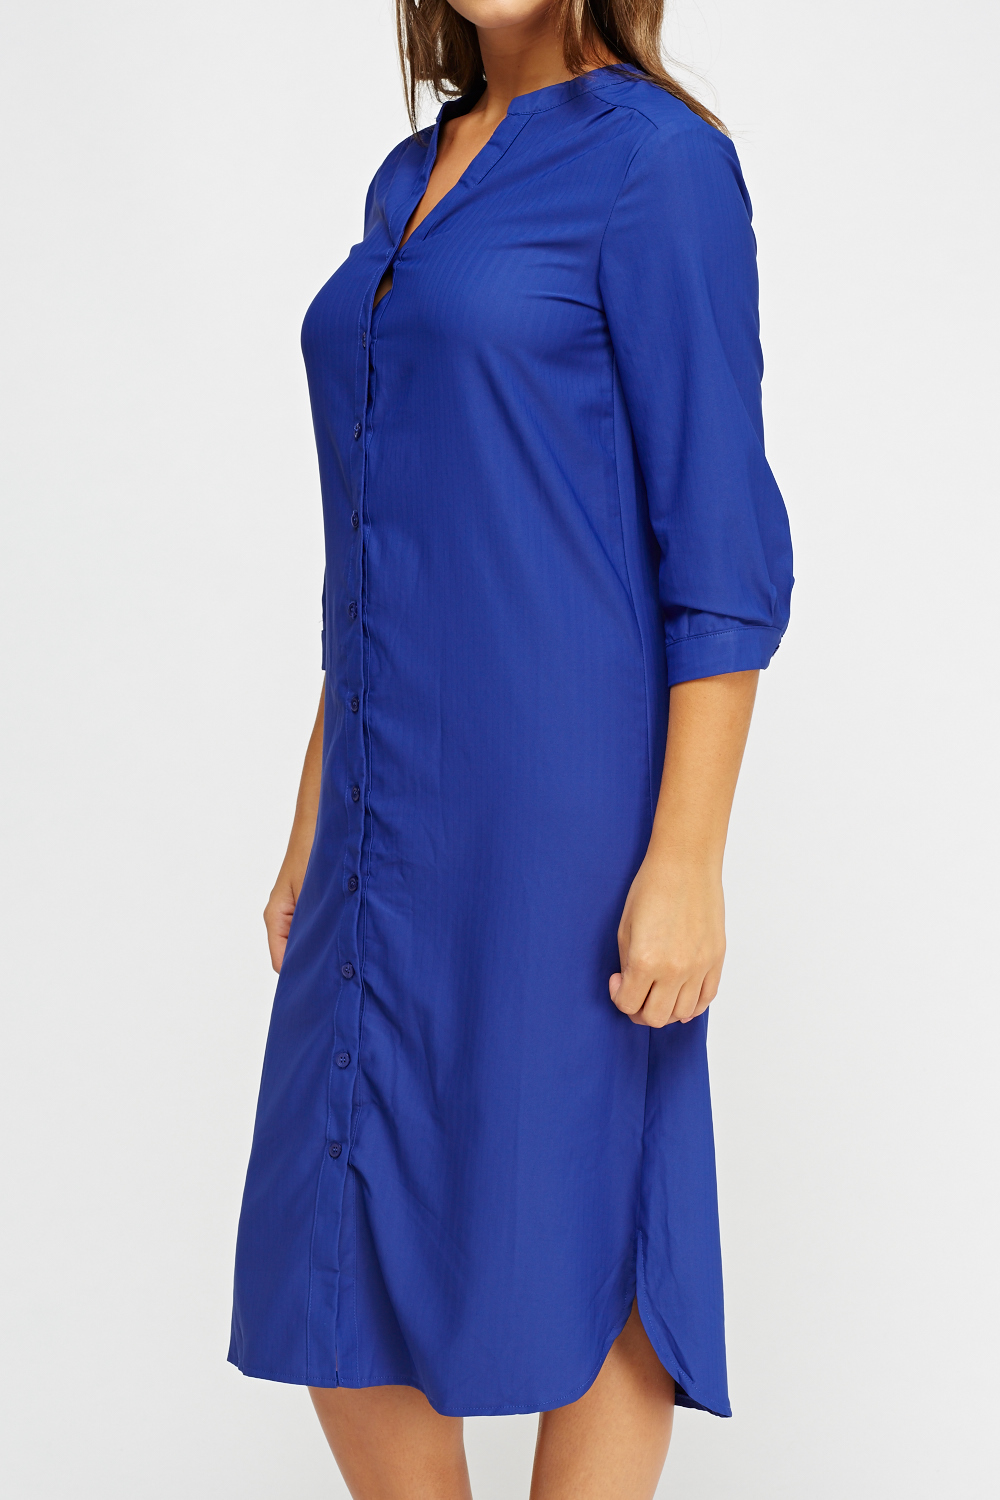 Royal Blue Shirt Dress - Just $7